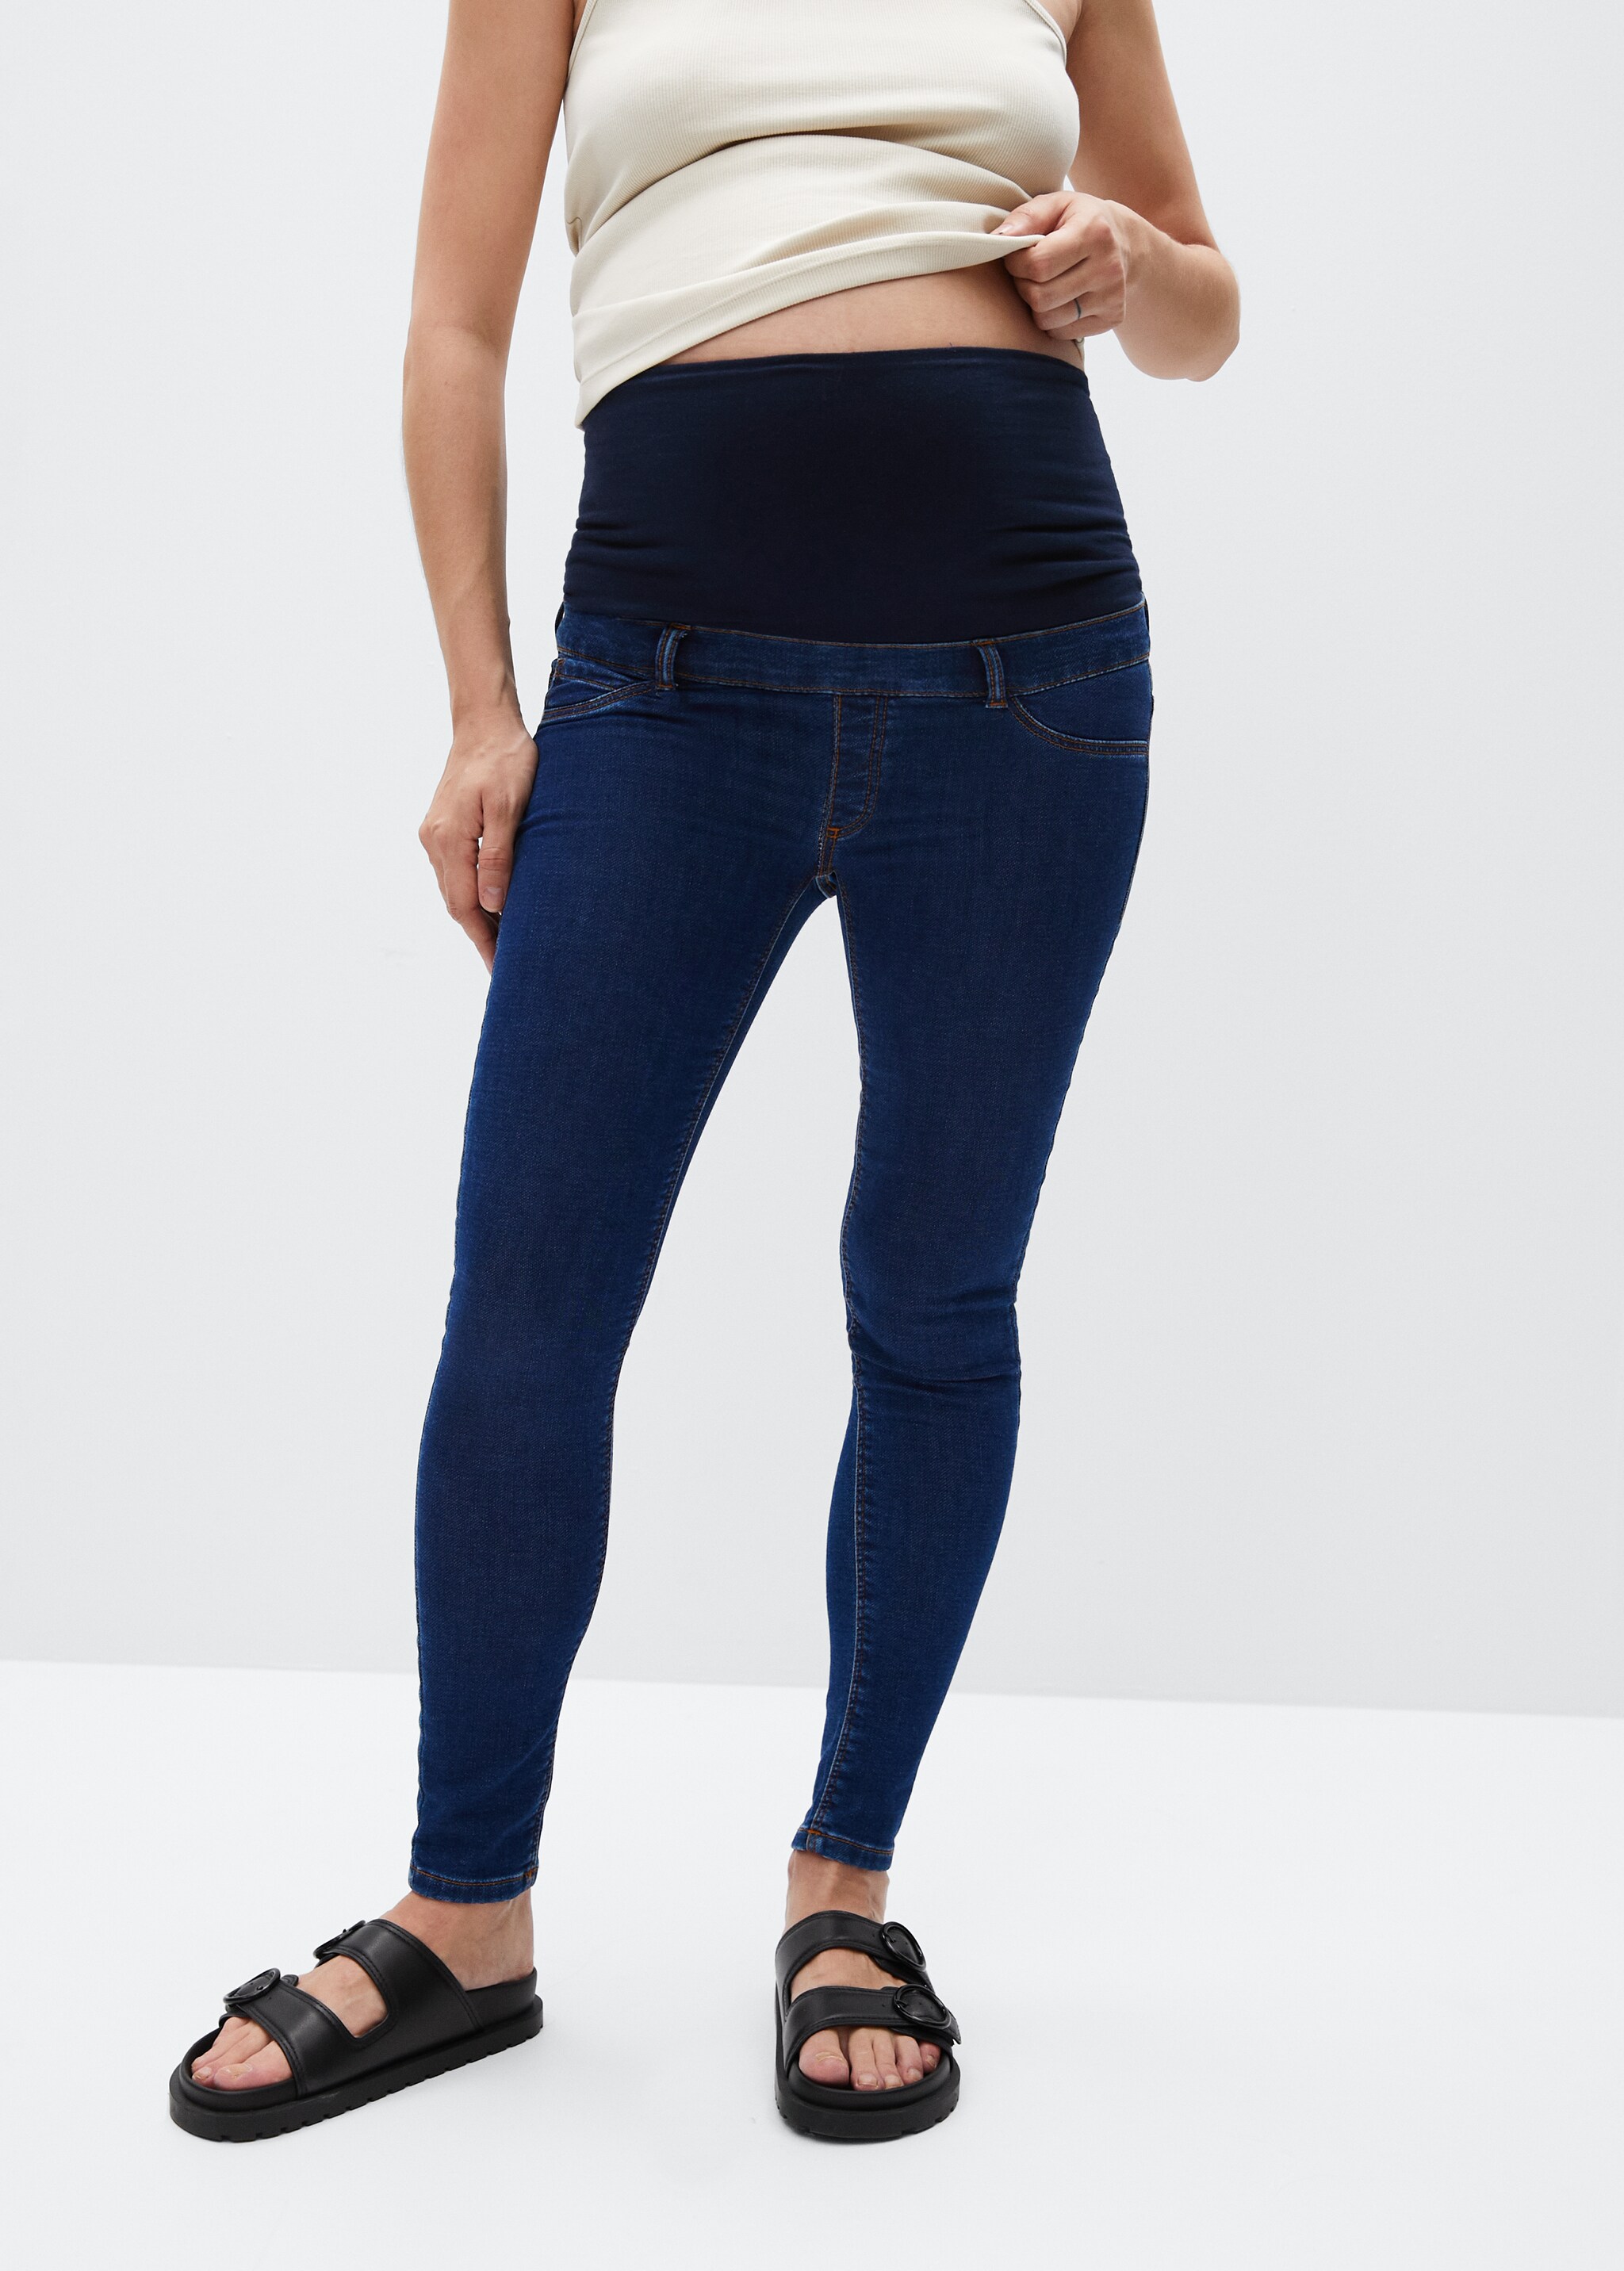 Skinny Maternity jeans - Medium plane